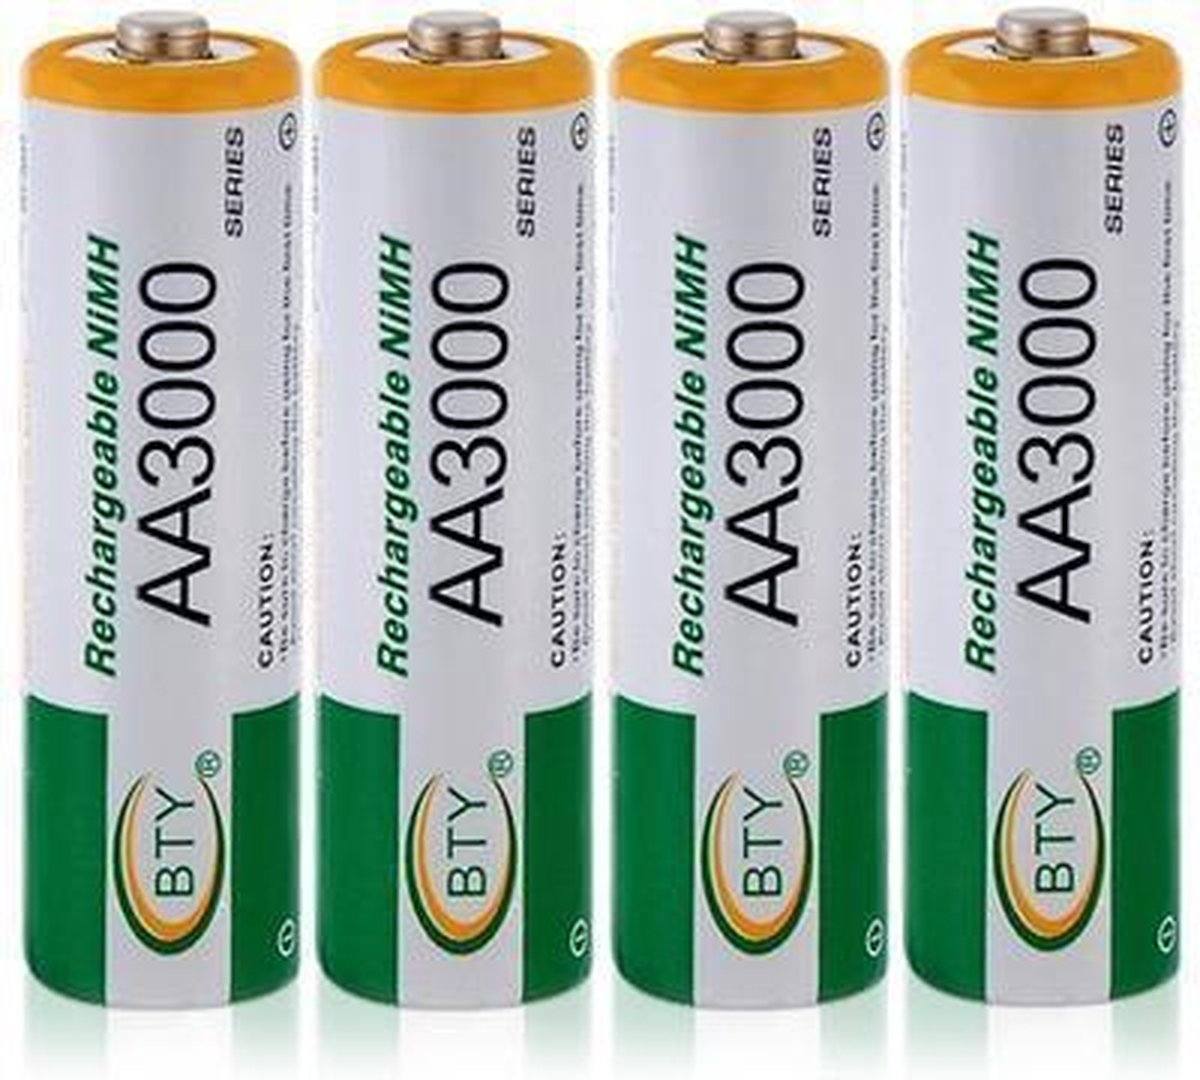 AA 3000mAh Oplaadbare Batterijen - 4 stuks inktmedia® huismerk